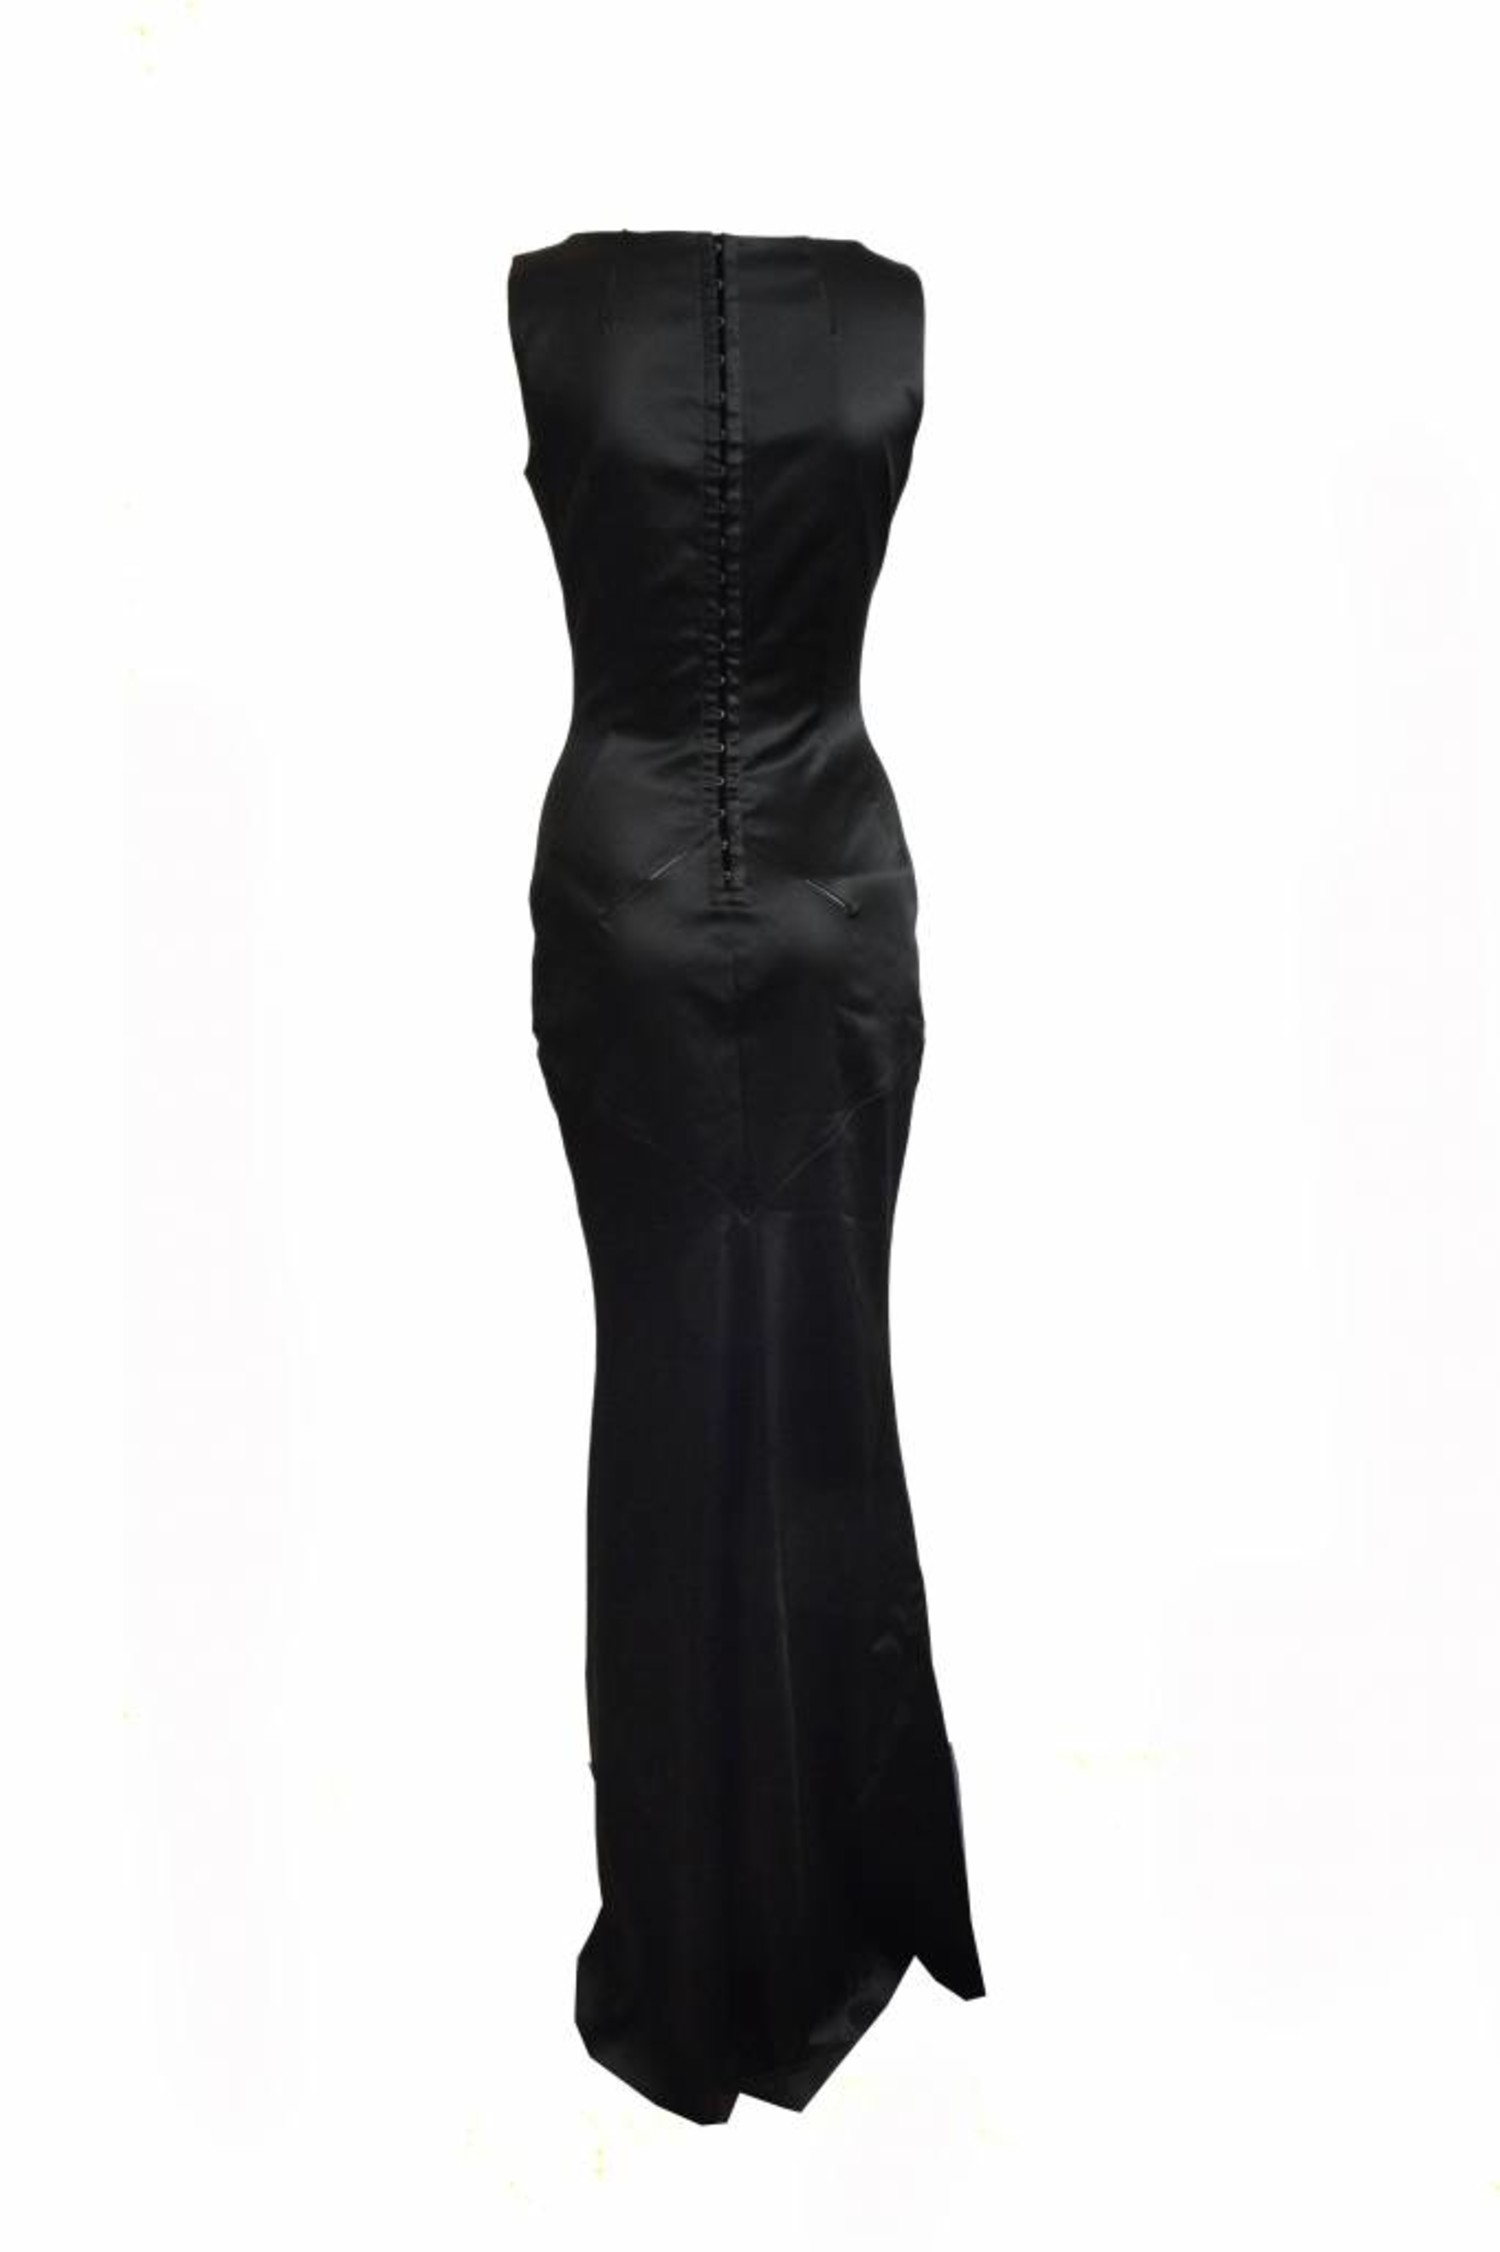 DOLCE & GABBANA Dress Red Silk Stretch Sheath Mermaid Gown IT40/US6/S RRP  $4000 | eBay